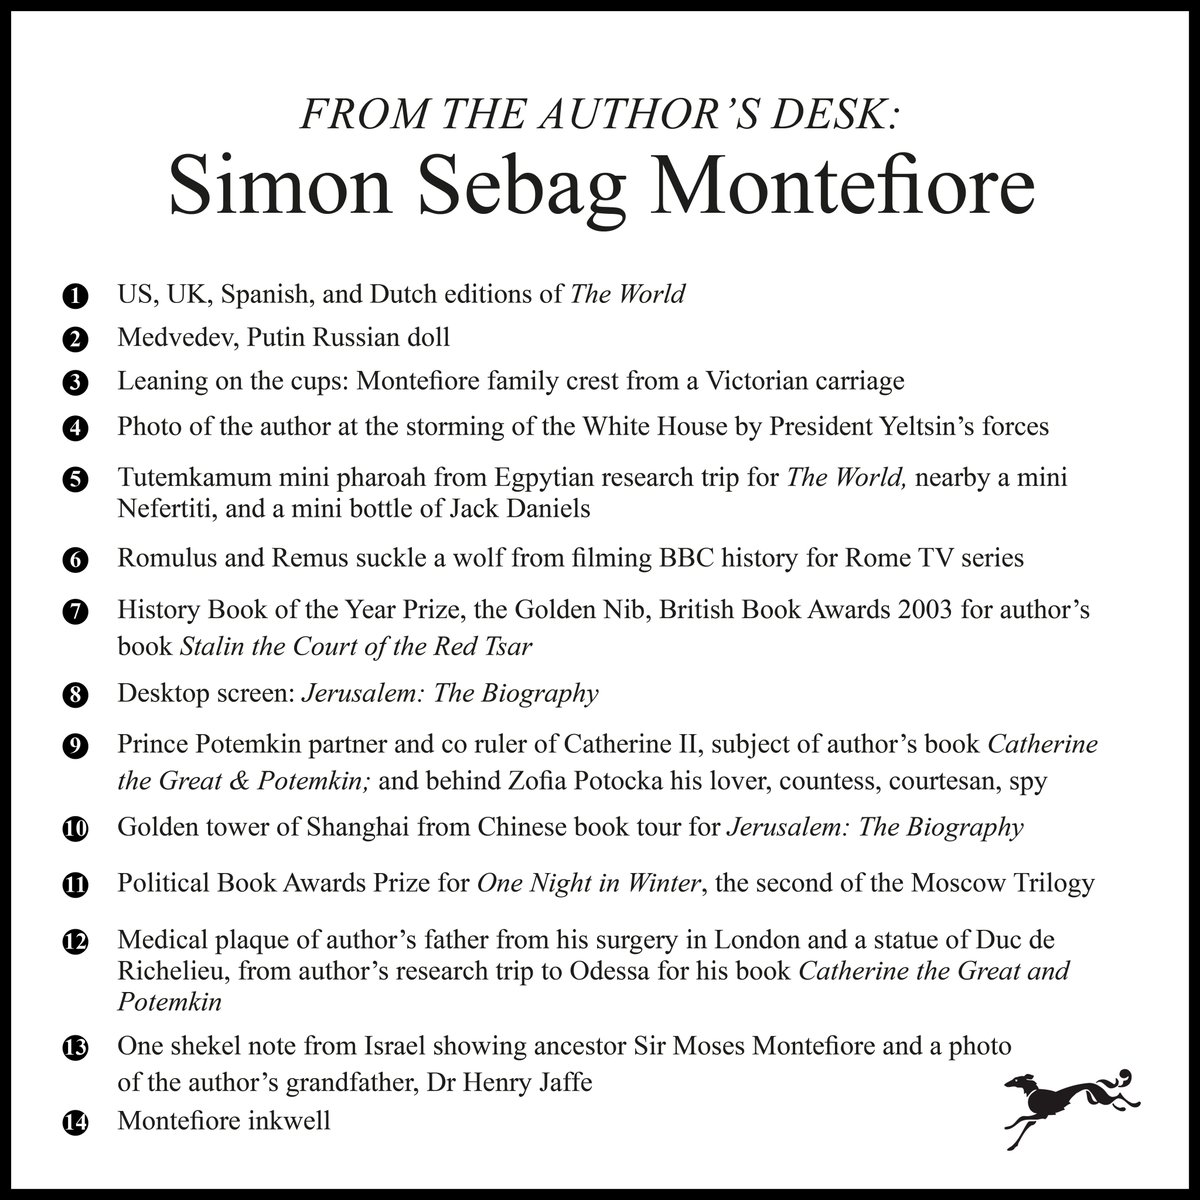 Wonder what worldly objects @simonmontefiore had next to him while writing #TheWorldAFamilyHistory??? 🧐🧐🧐
@AAKnopf